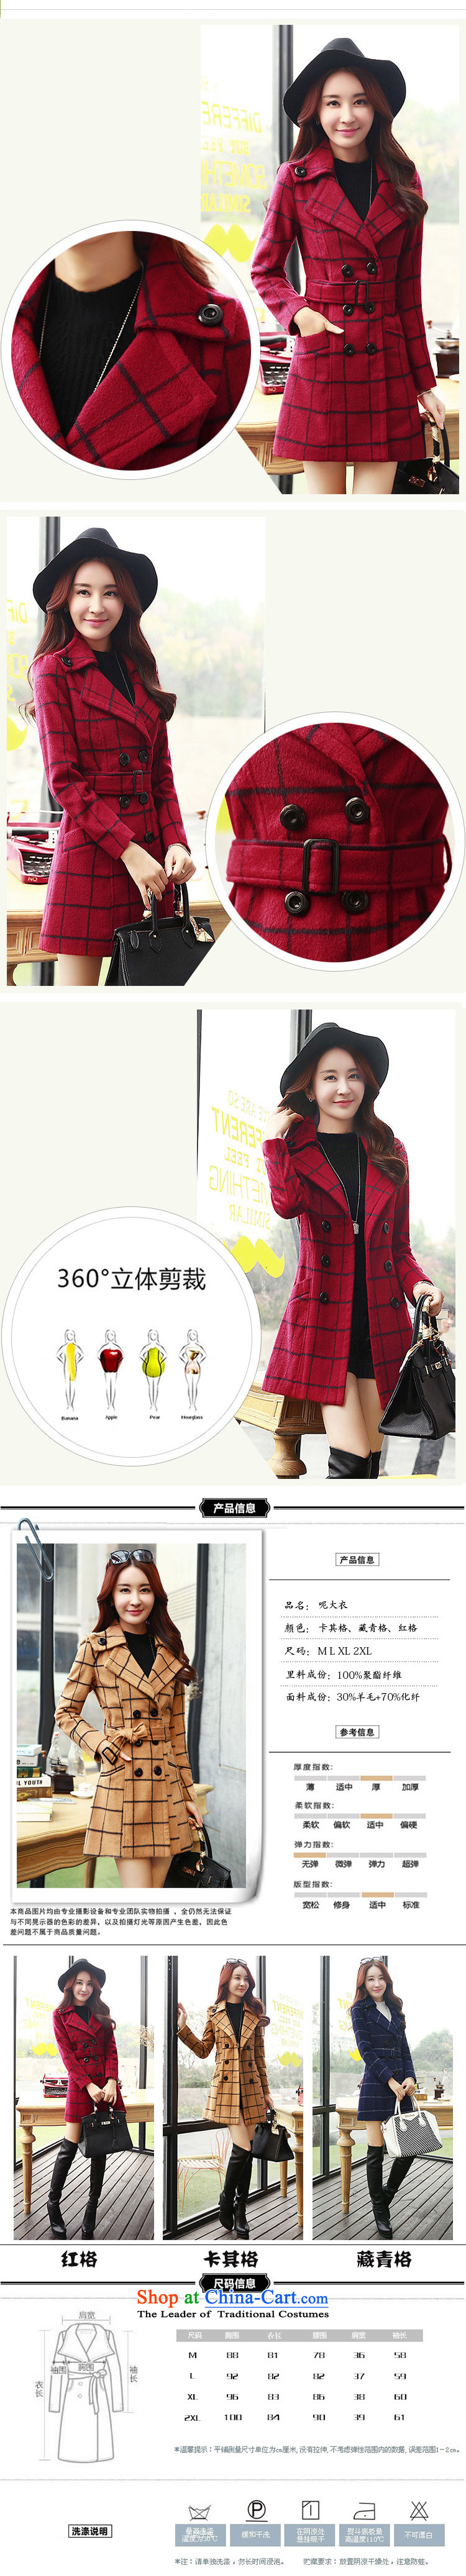 Mini-filled style 2015 autumn and winter coats gross new female Korean? 